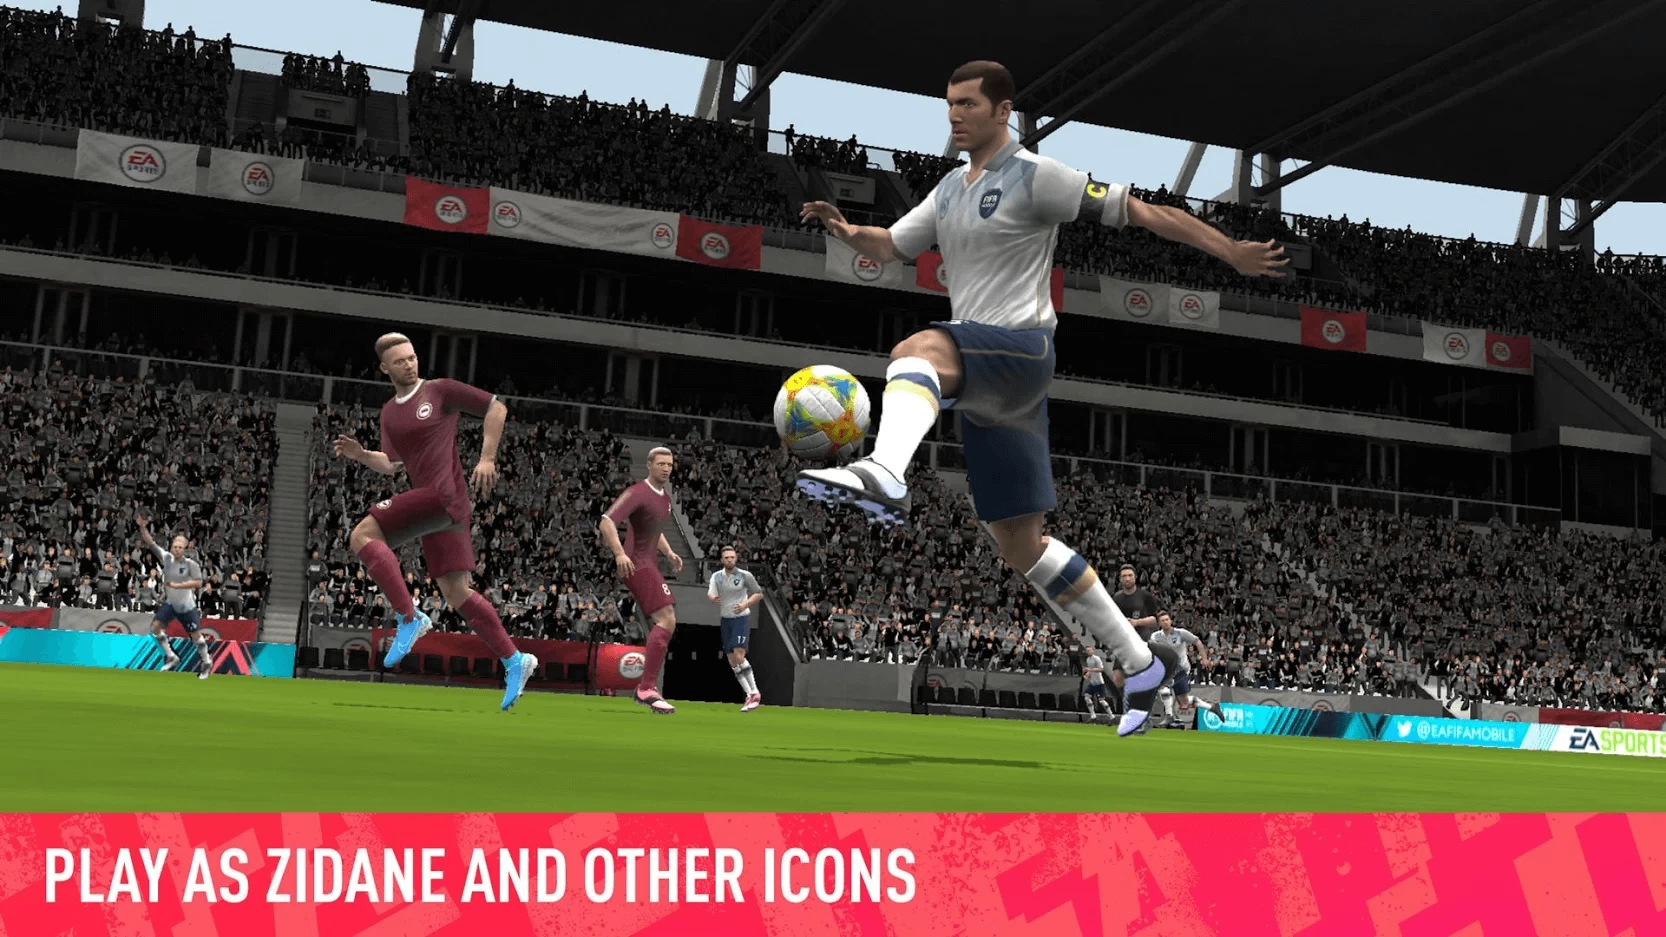 Fifa Soccergameloop Mobile Android Games Emulator On Pc For Free Official Pubg Mobile Emulator